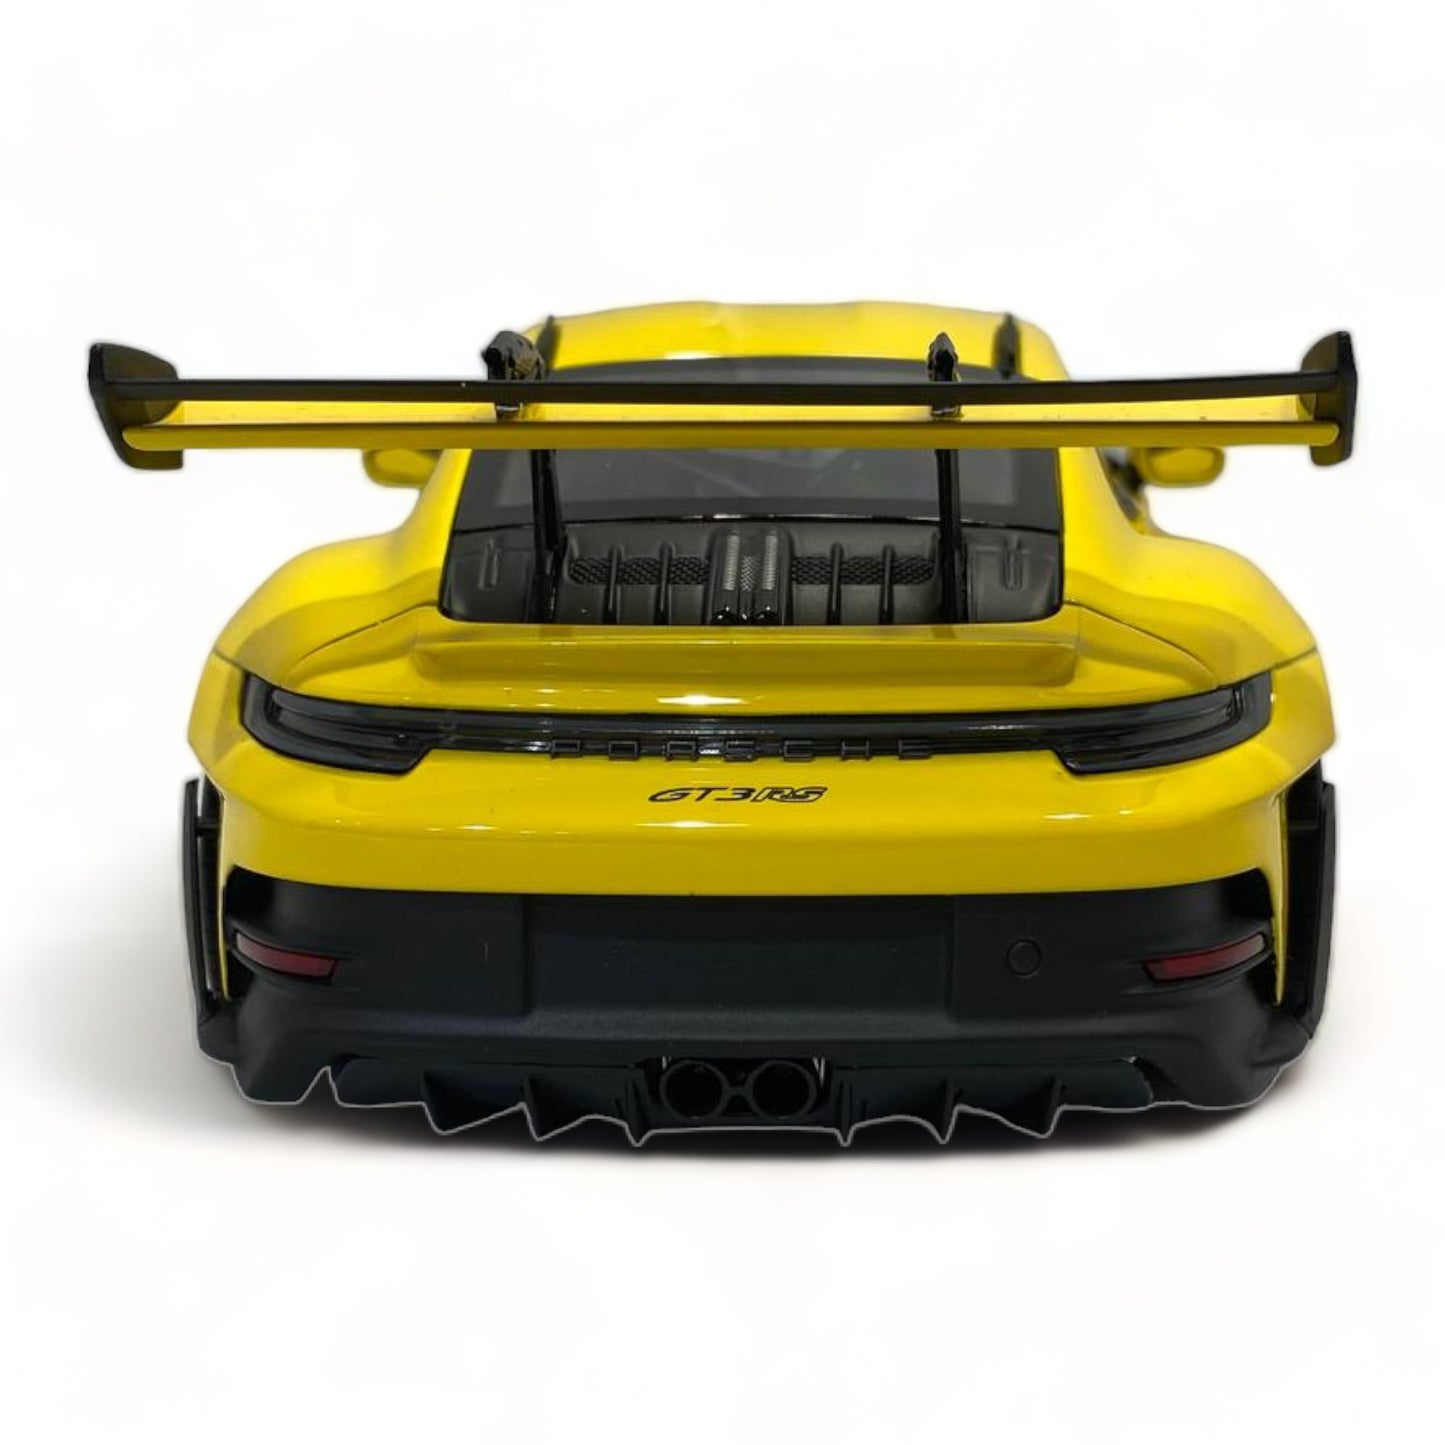 1/18 Norev Metal Diecast - Porsche 911 GT3 RS in Striking Yellow|Sold in Dturman.com Dubai UAE.